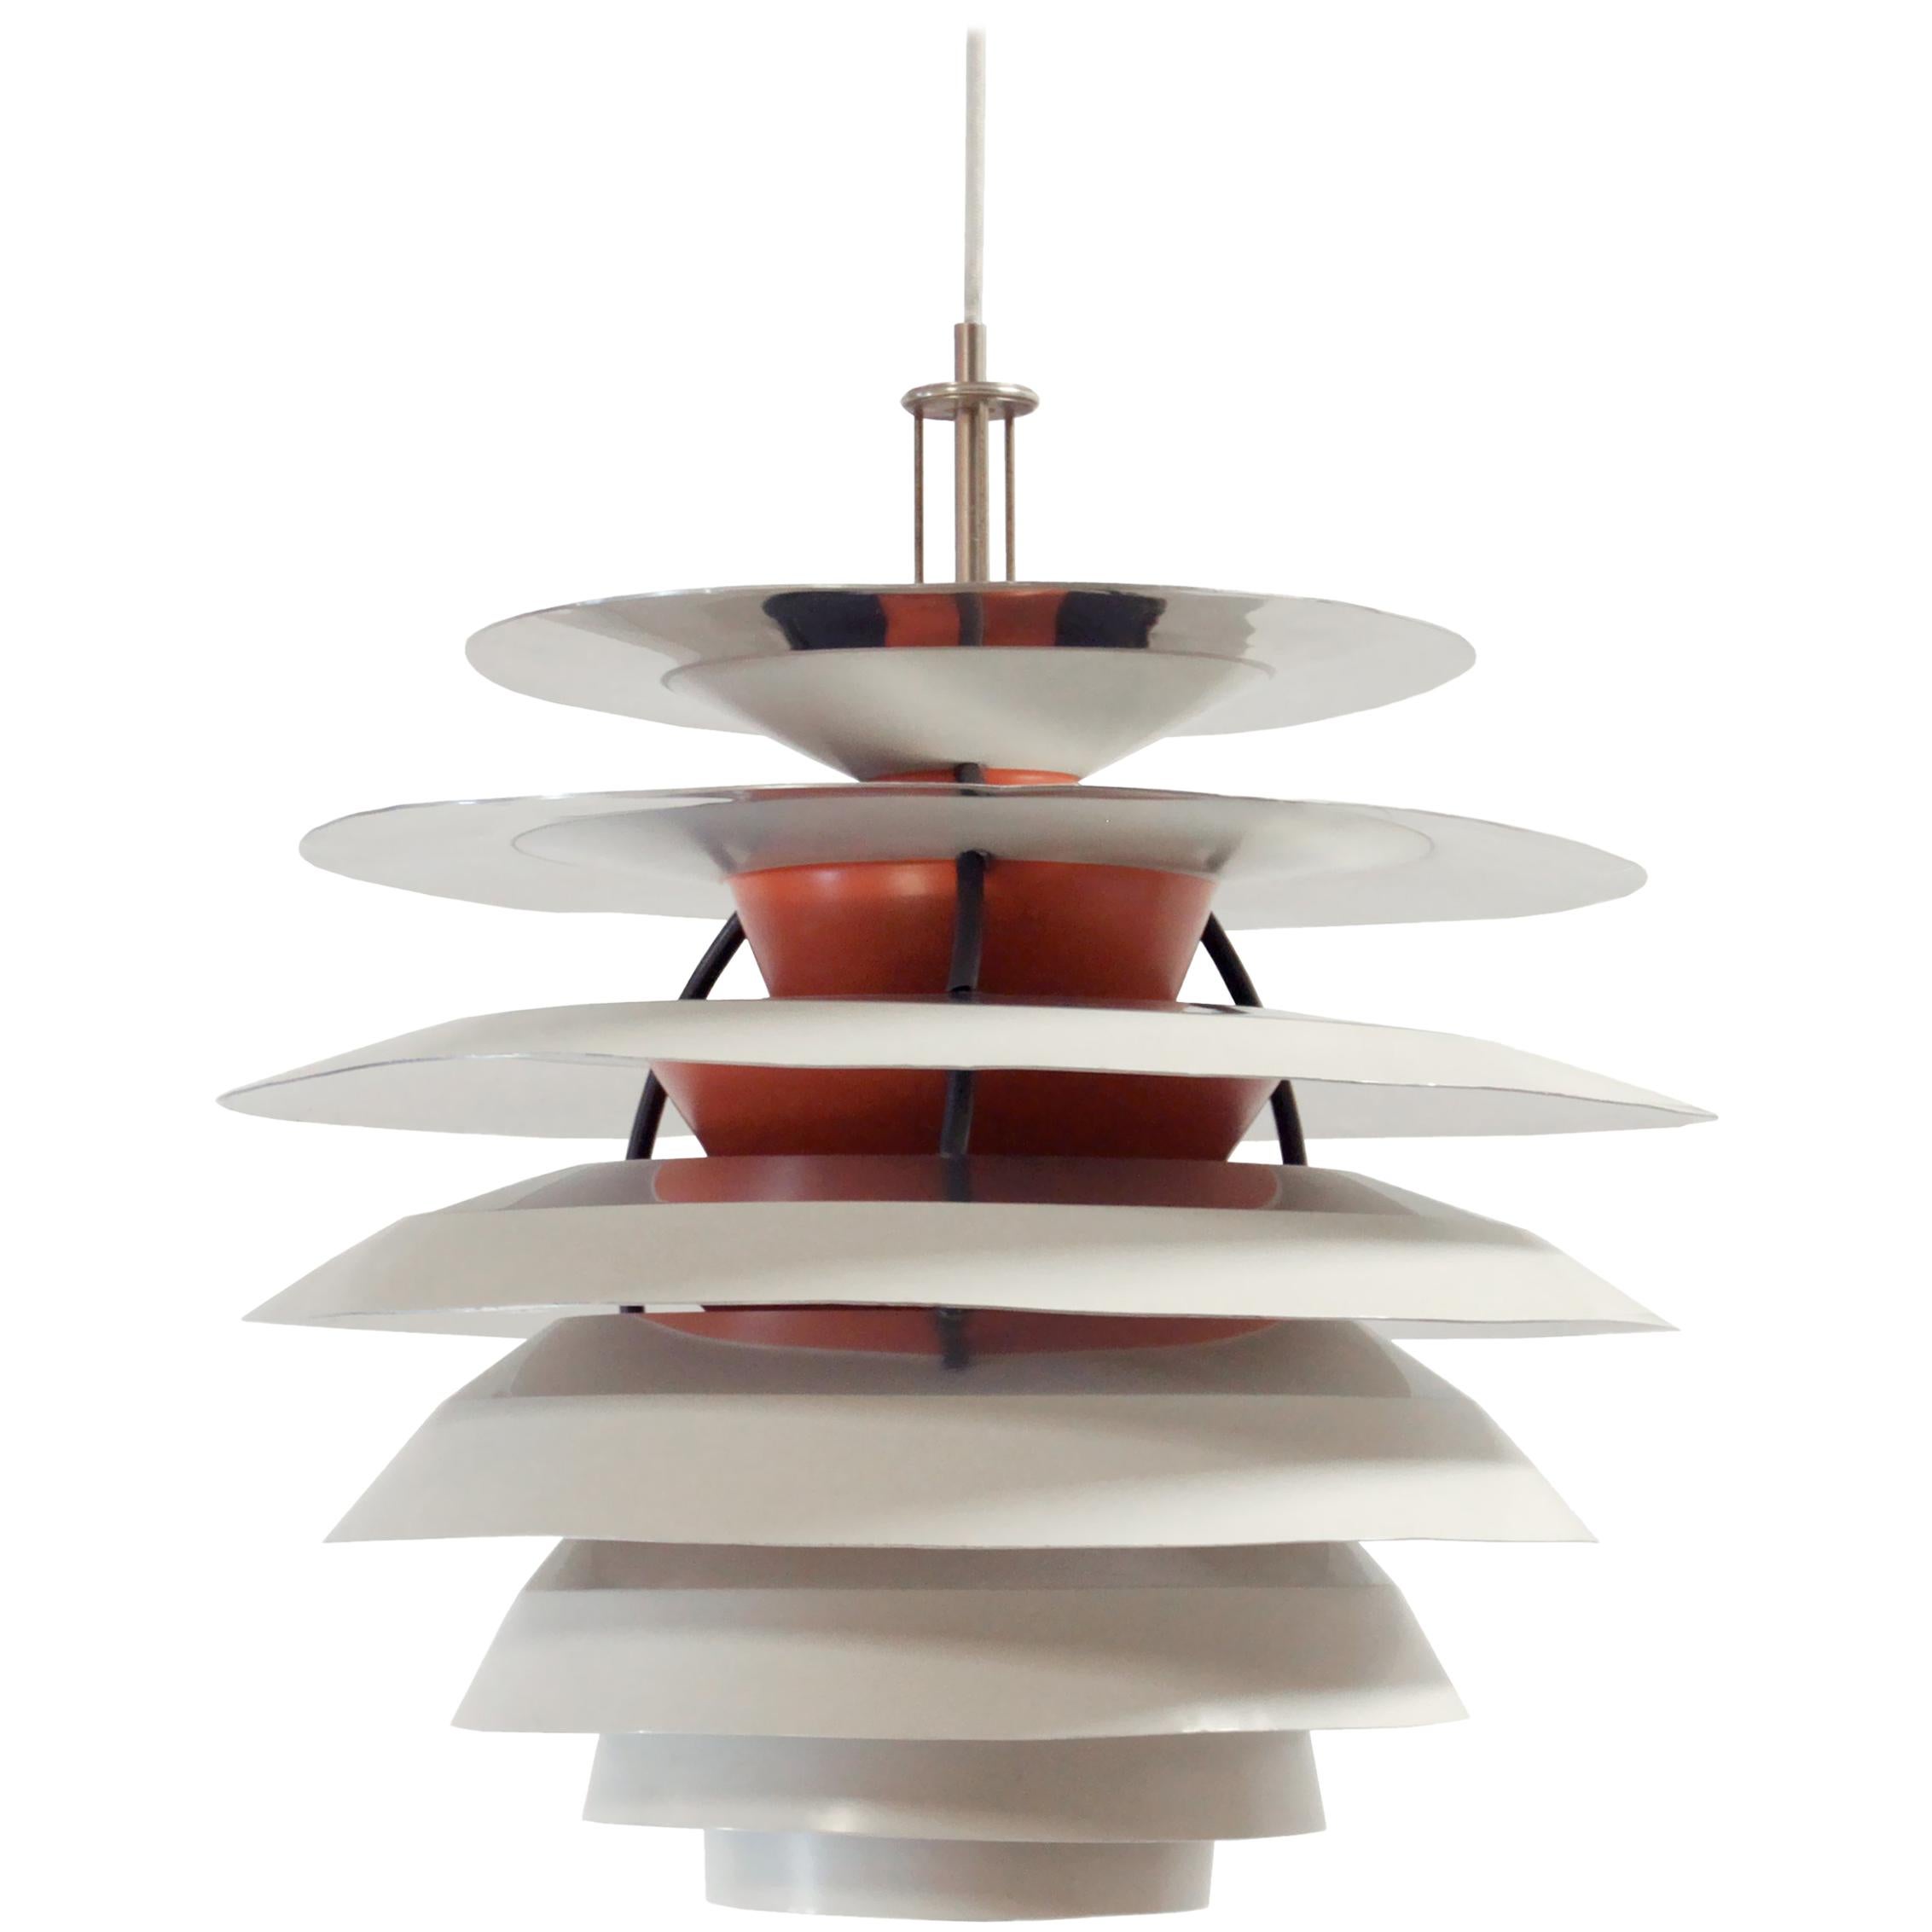 'Kontrast' Ceiling Lamp by Poul Henningsen for Louis Poulsen, 1960s